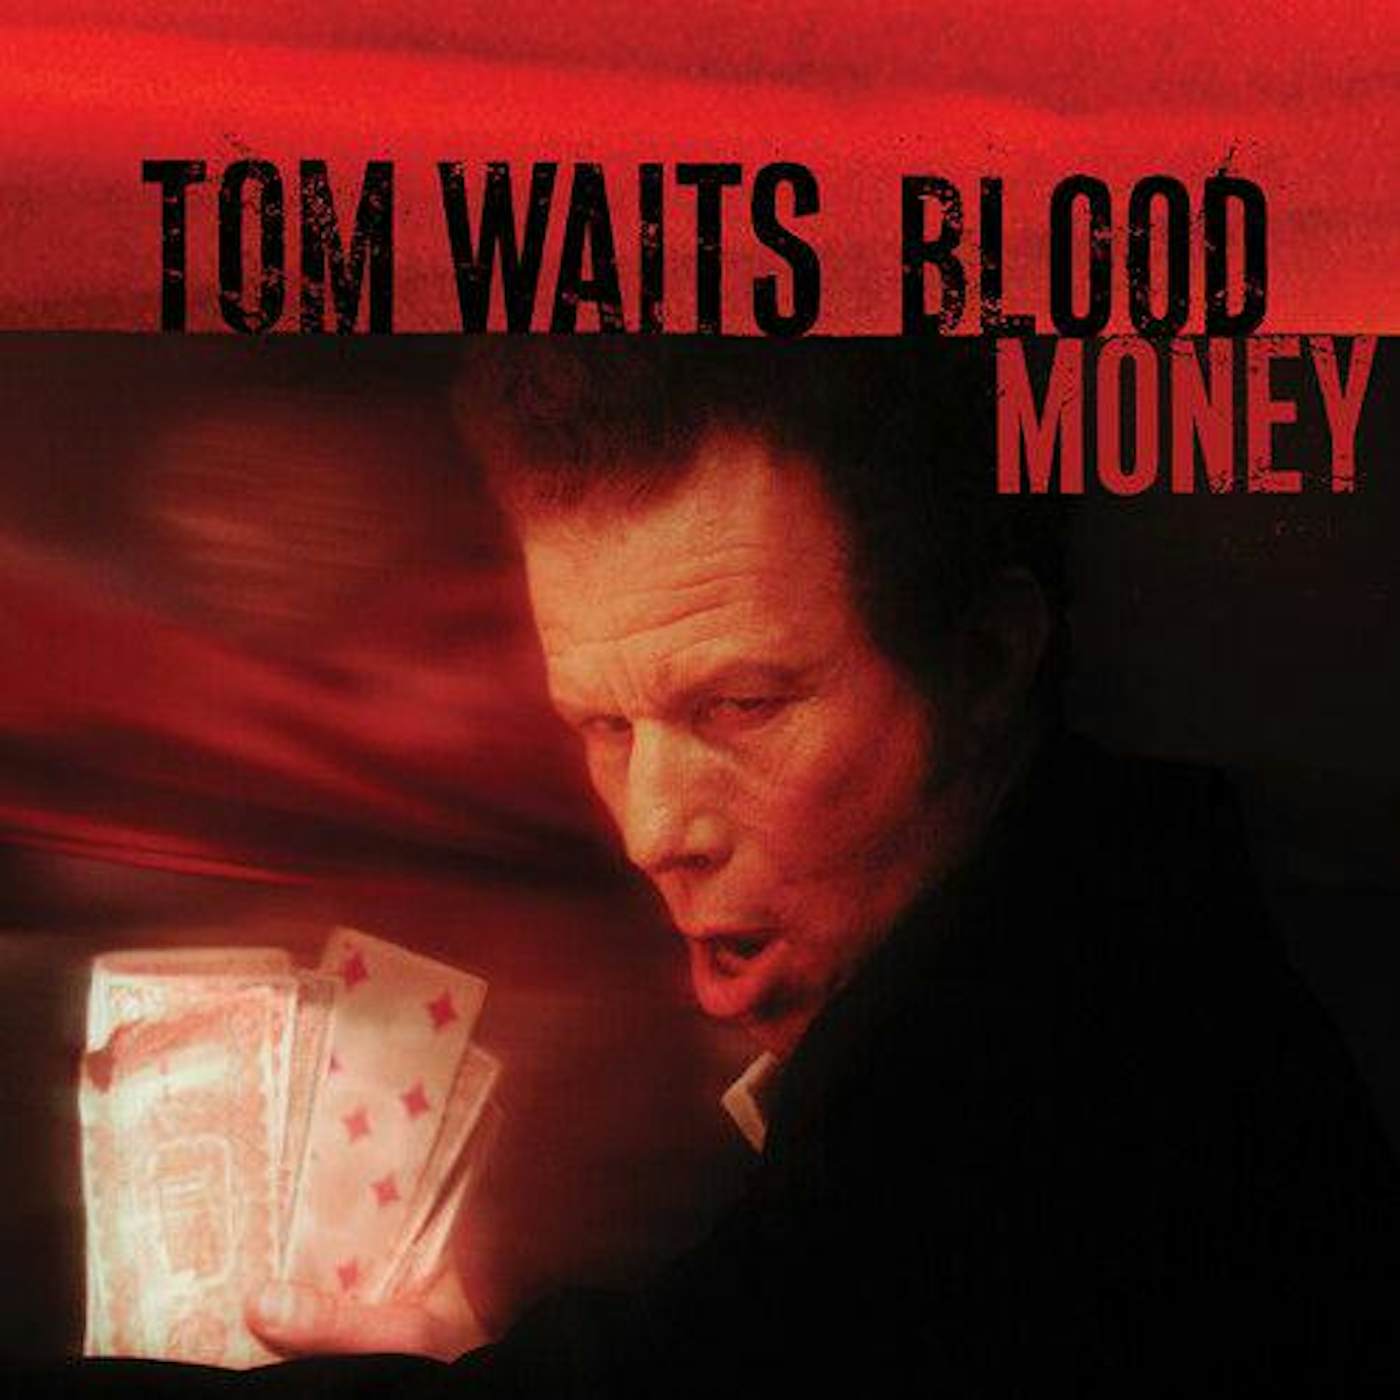 Tom Waits Blood Money (Anniversary Ed.) (Metallic Silver) Vinyl Record